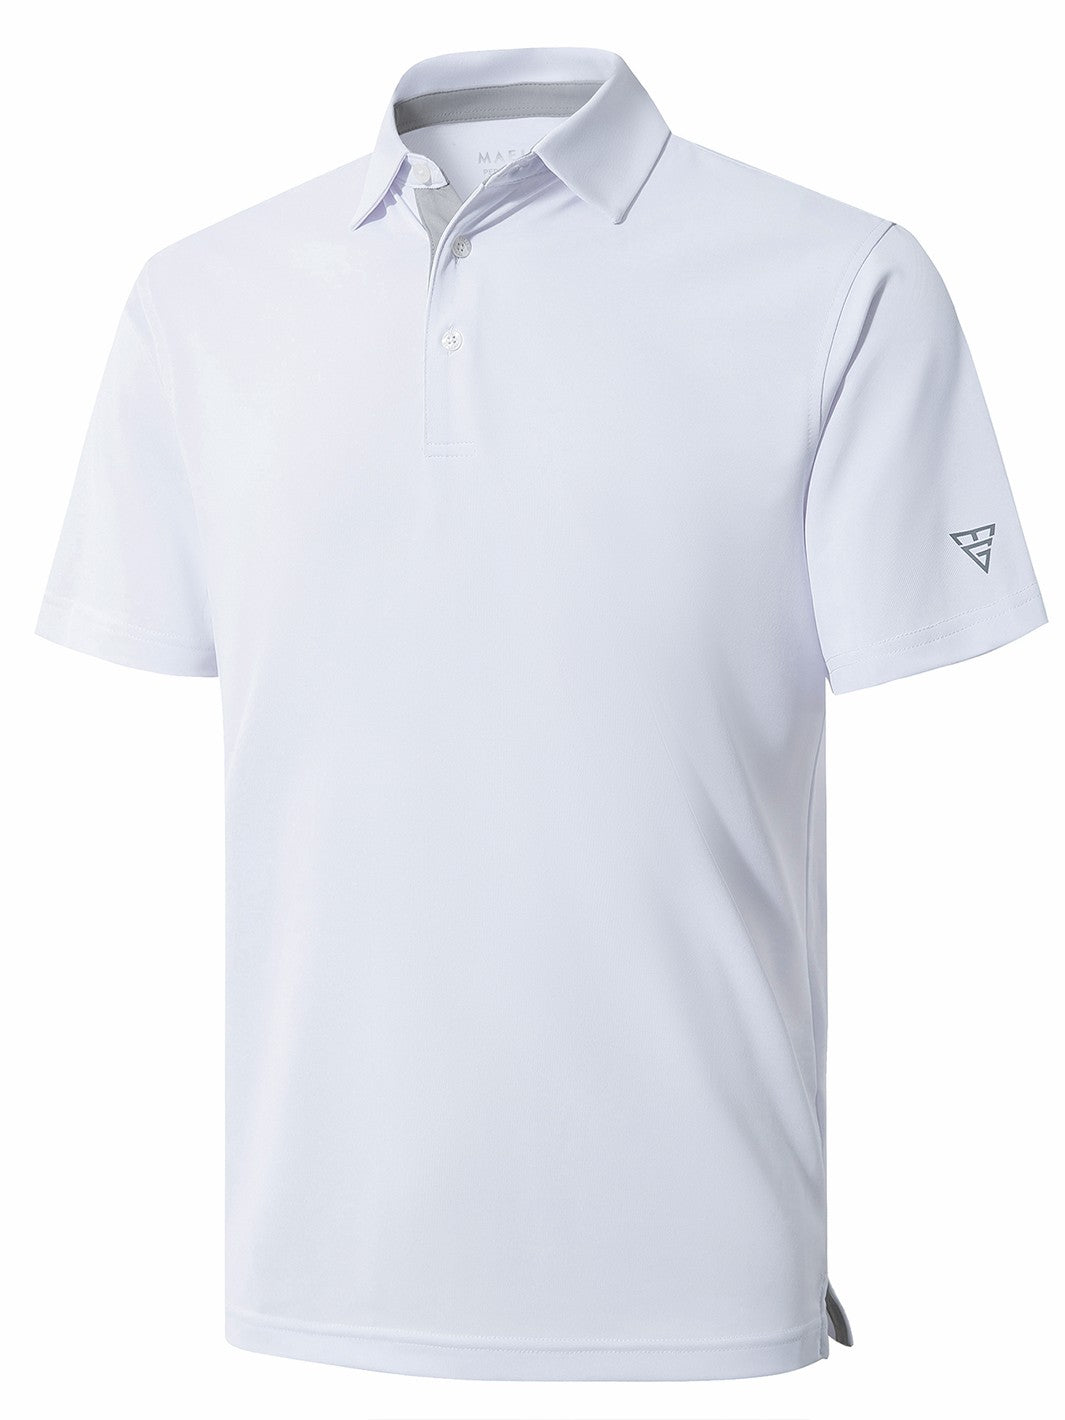 Men's Solid Pique Golf Shirts-White